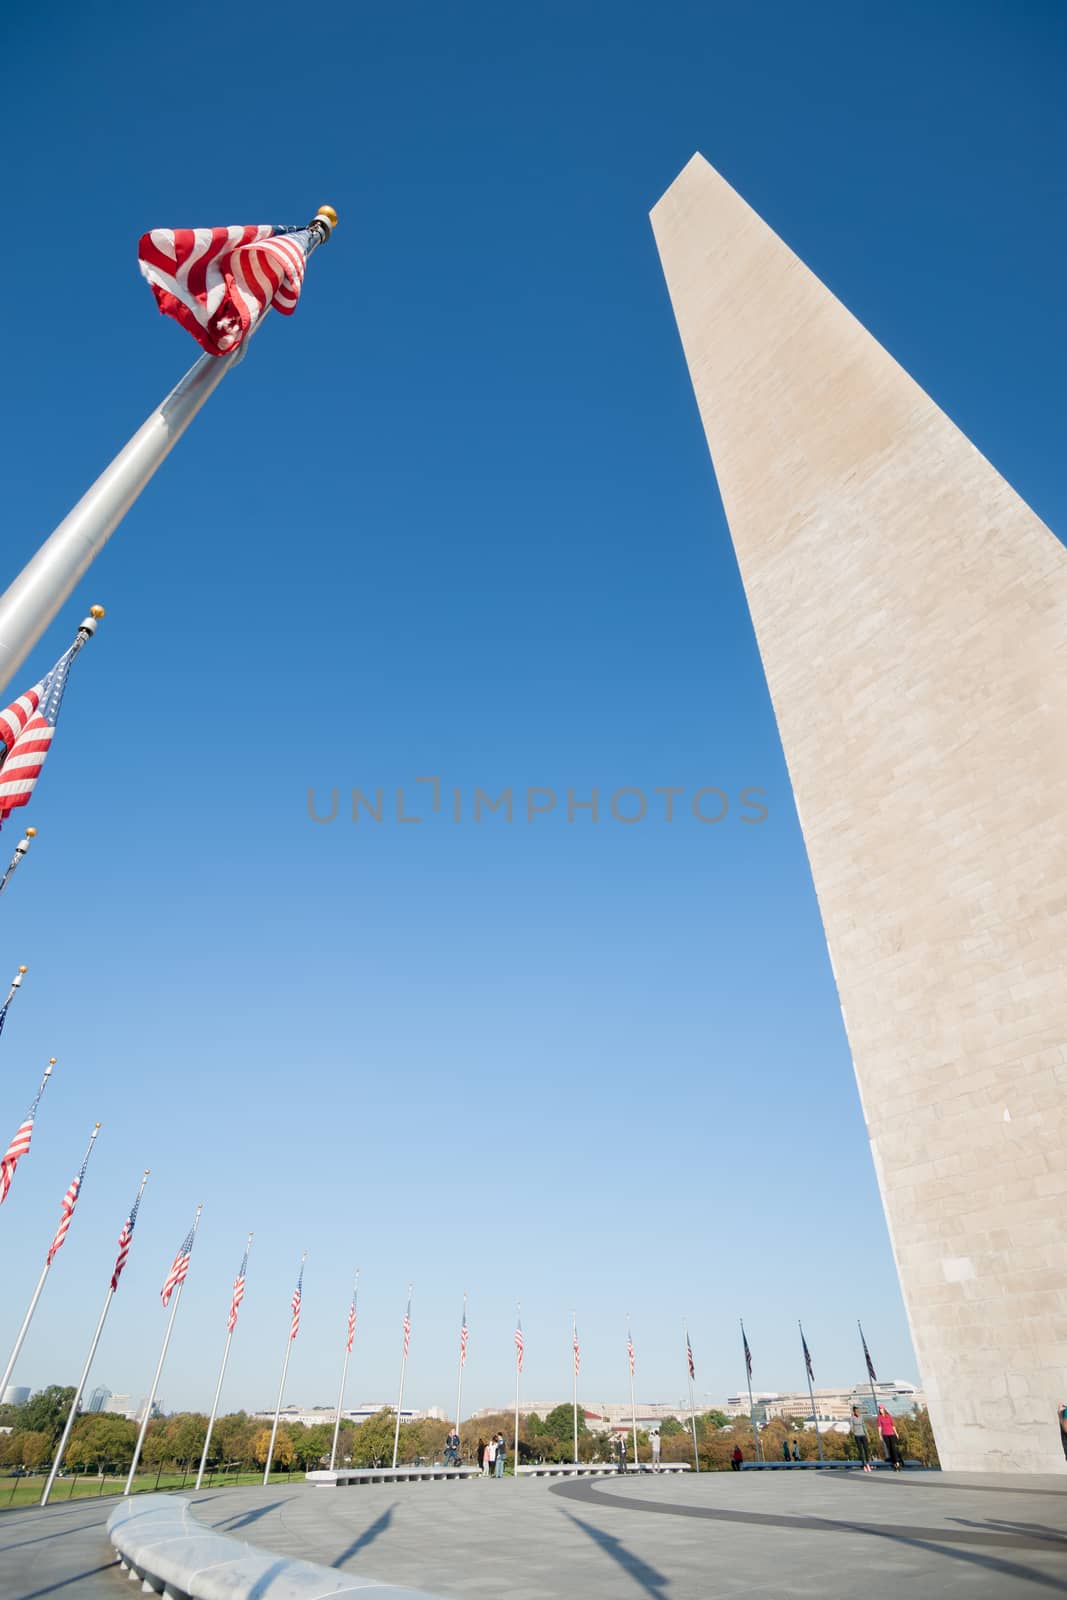 Washington Monument tall obelisk in National Mall Washington DC  by brians101